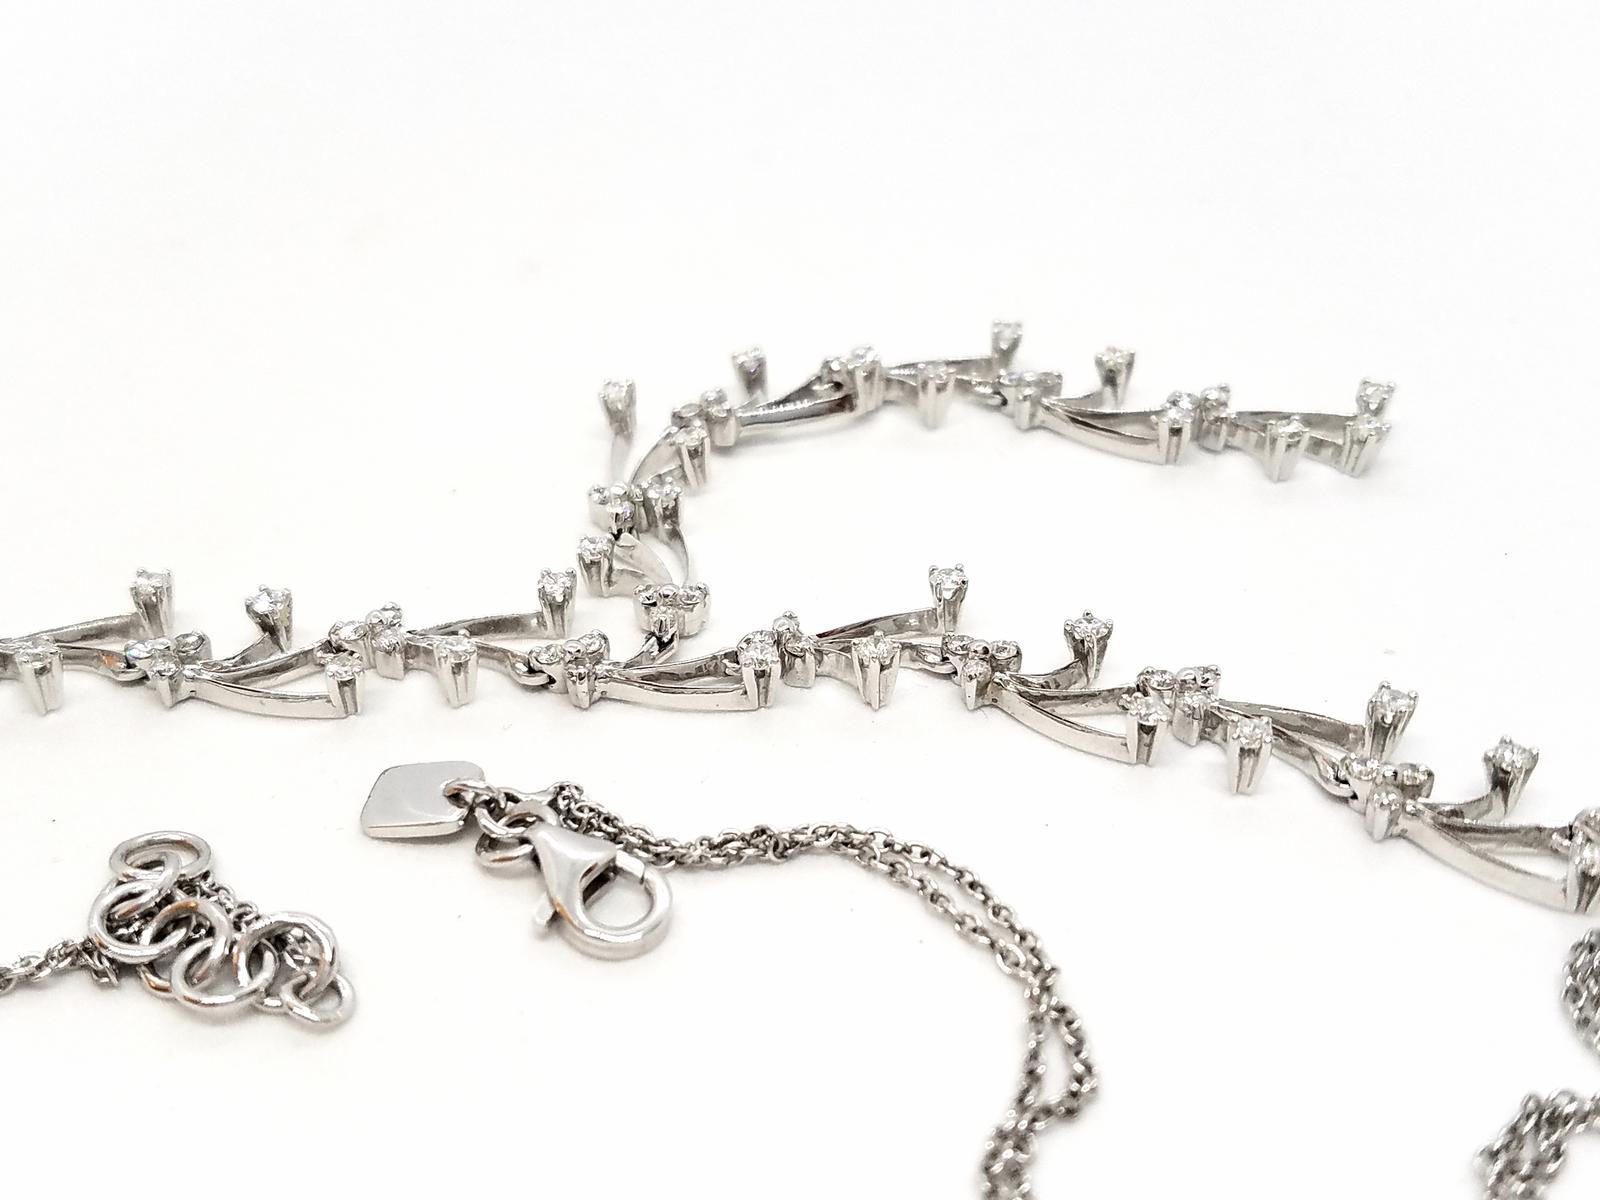 Women's Chain Necklace White GoldDiamond For Sale